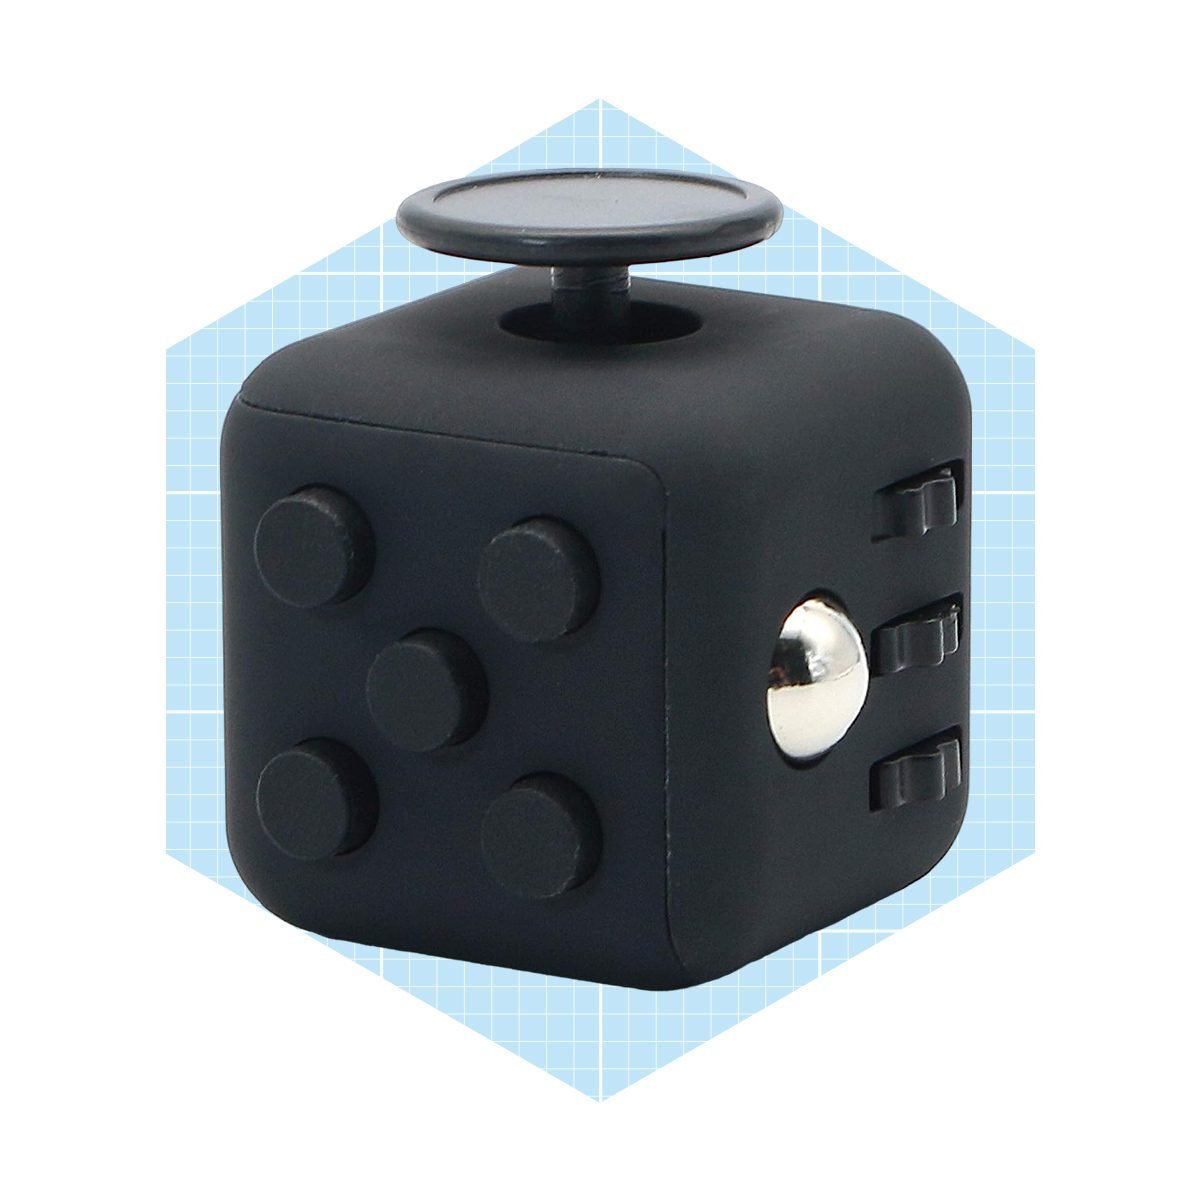 Appash Fidget Cube Ecomm Via Amazon.com